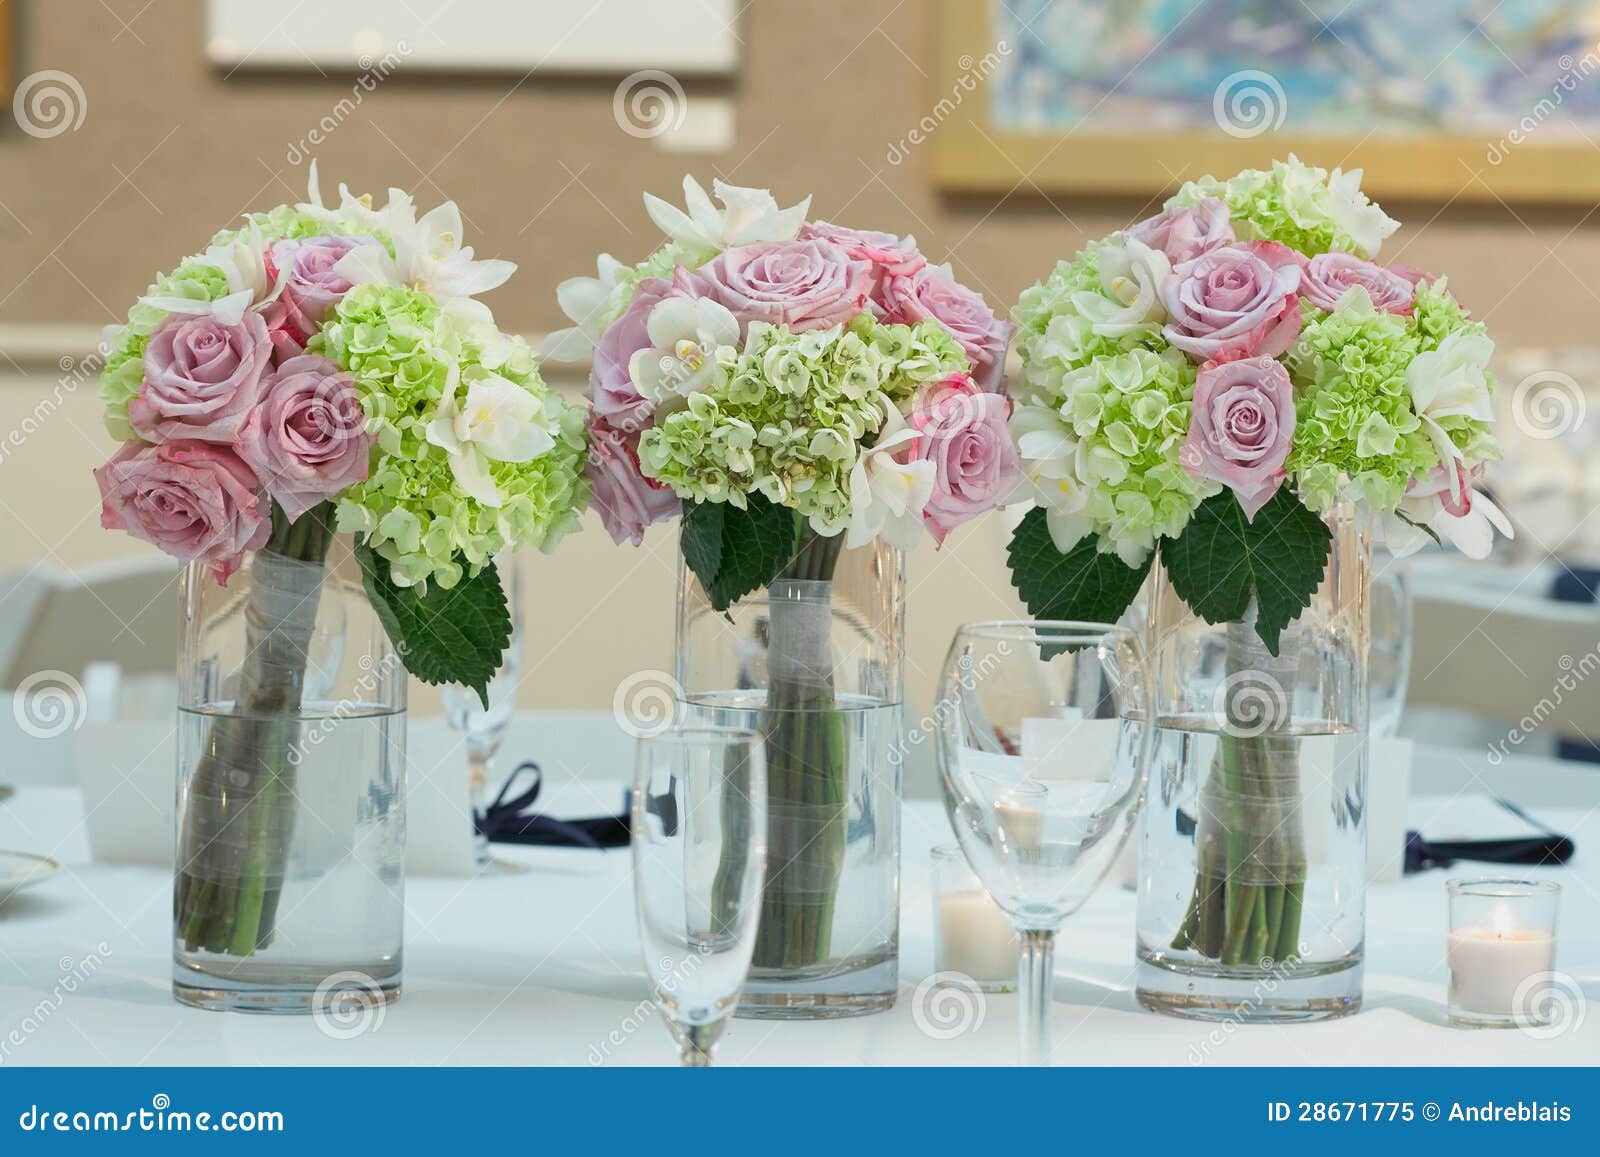 Wedding flowers centerpeices